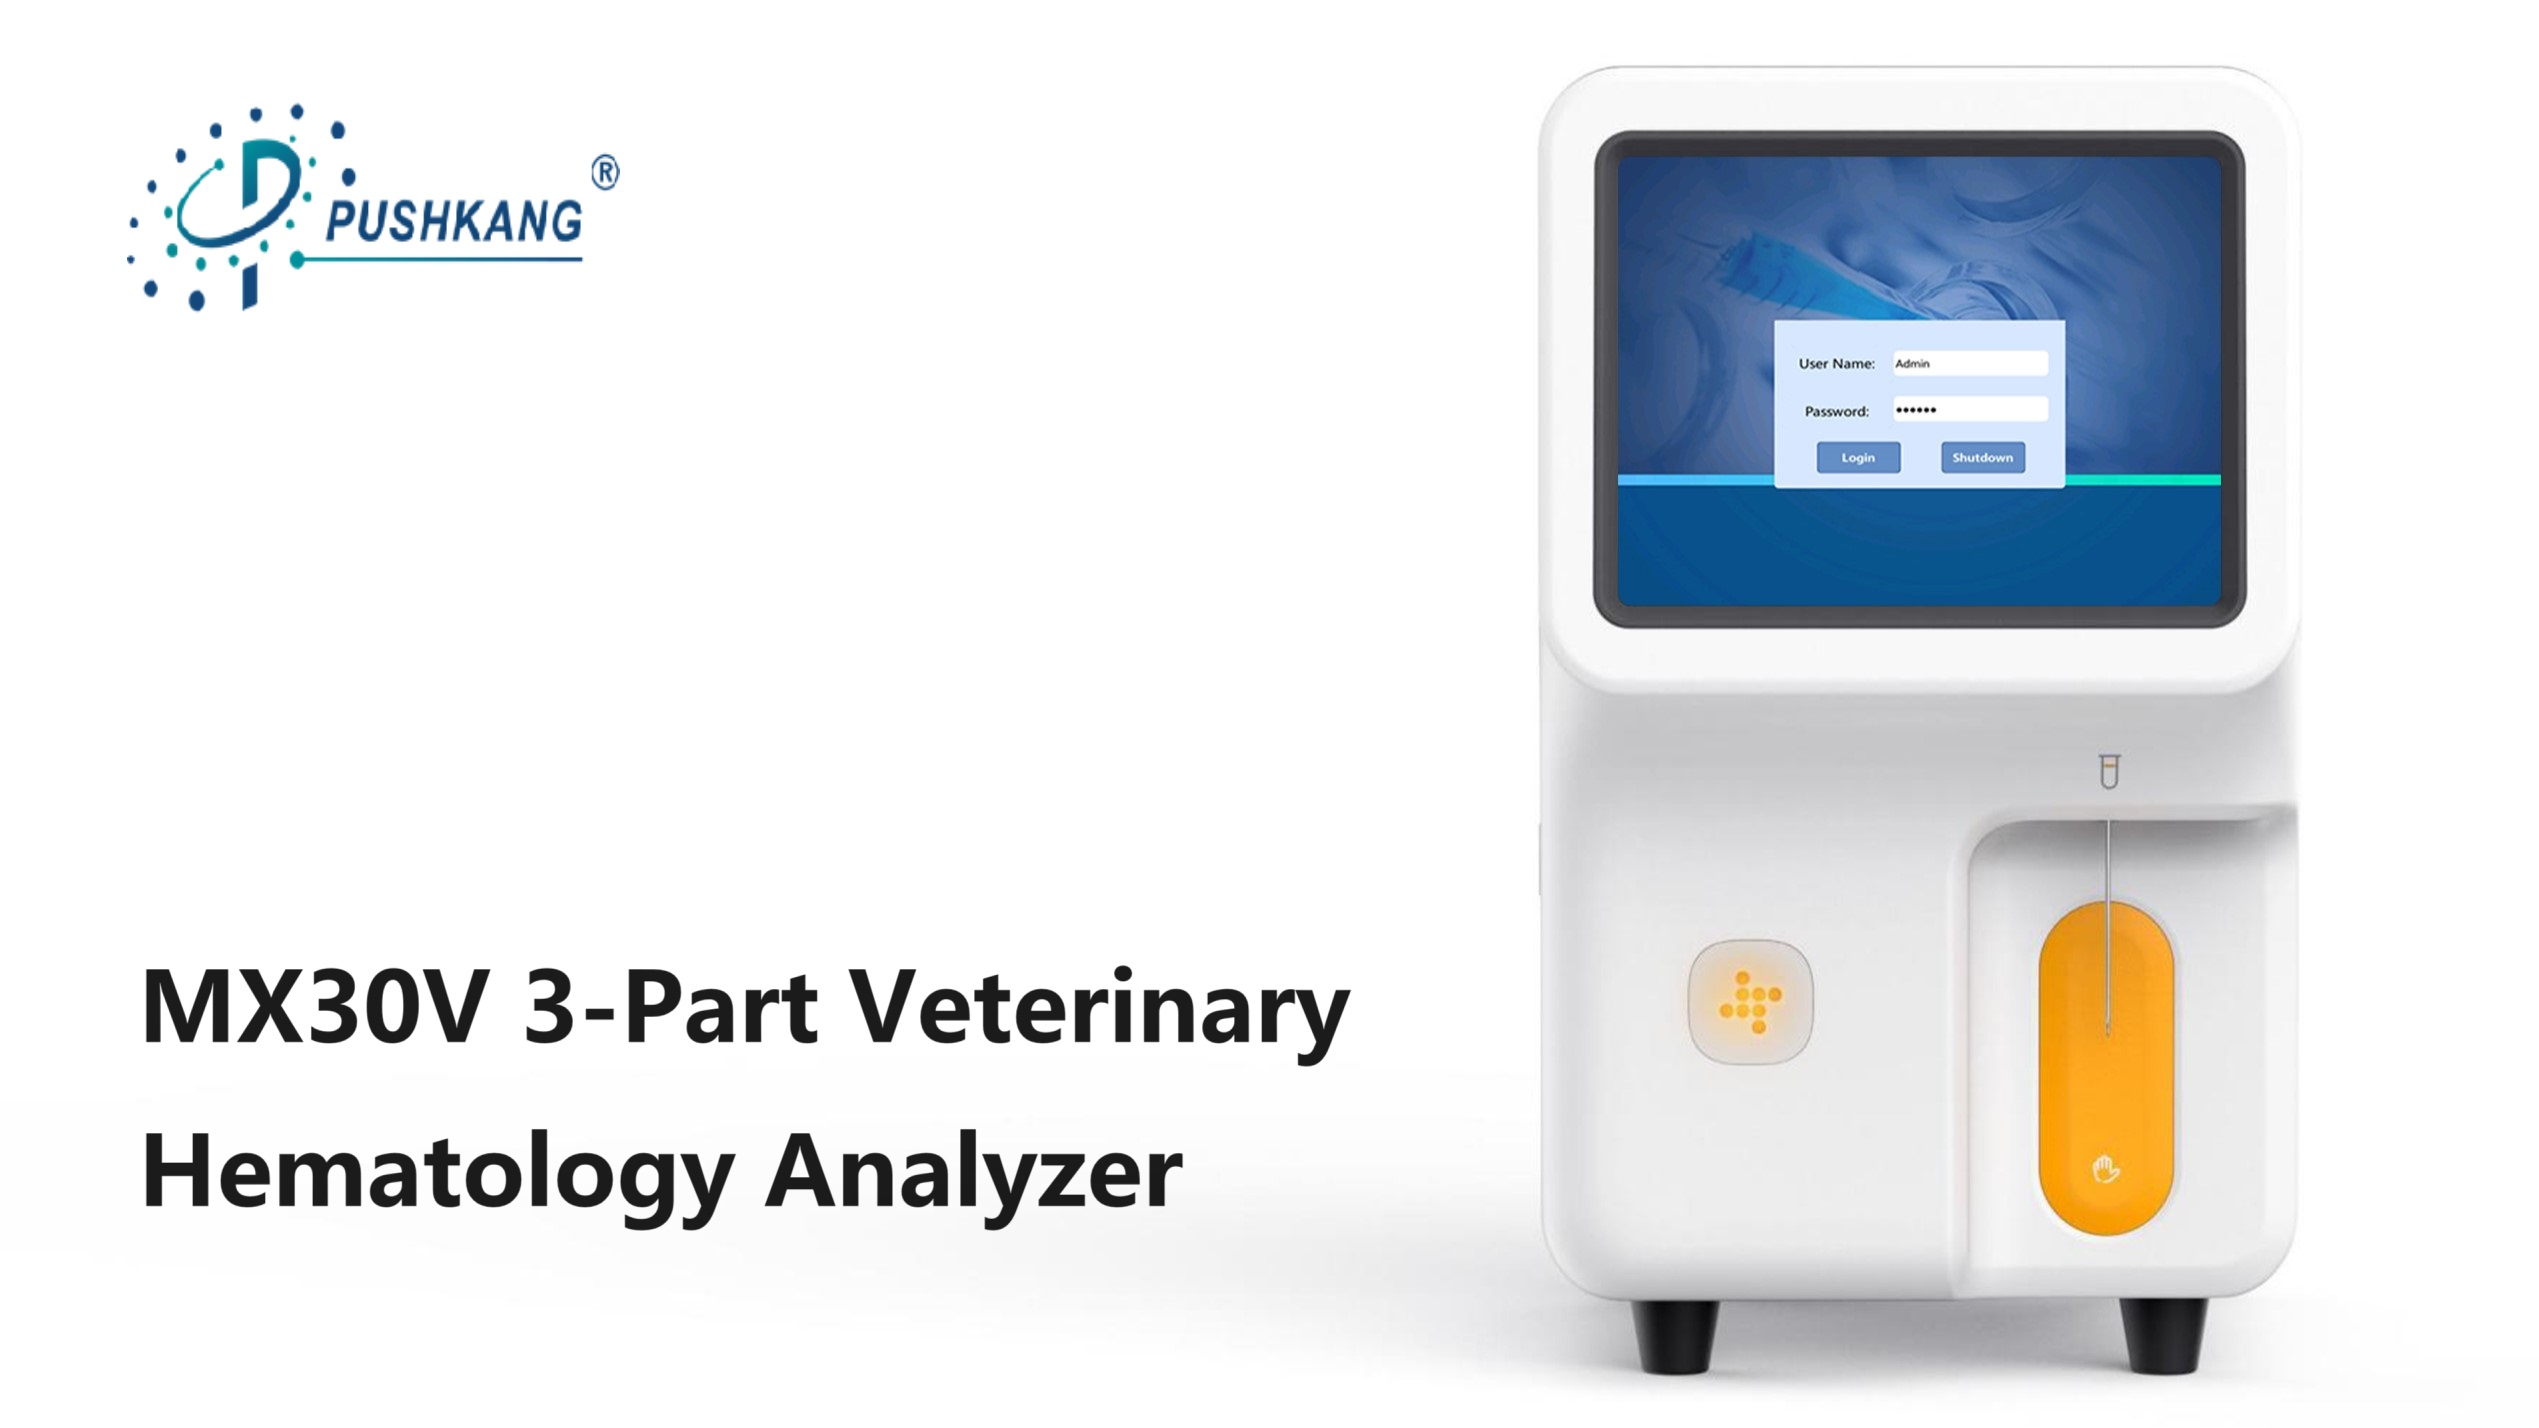 MX30V 3-Part Veterinary Hematology Analyzer: A Breakthrough in Animal Healthcare